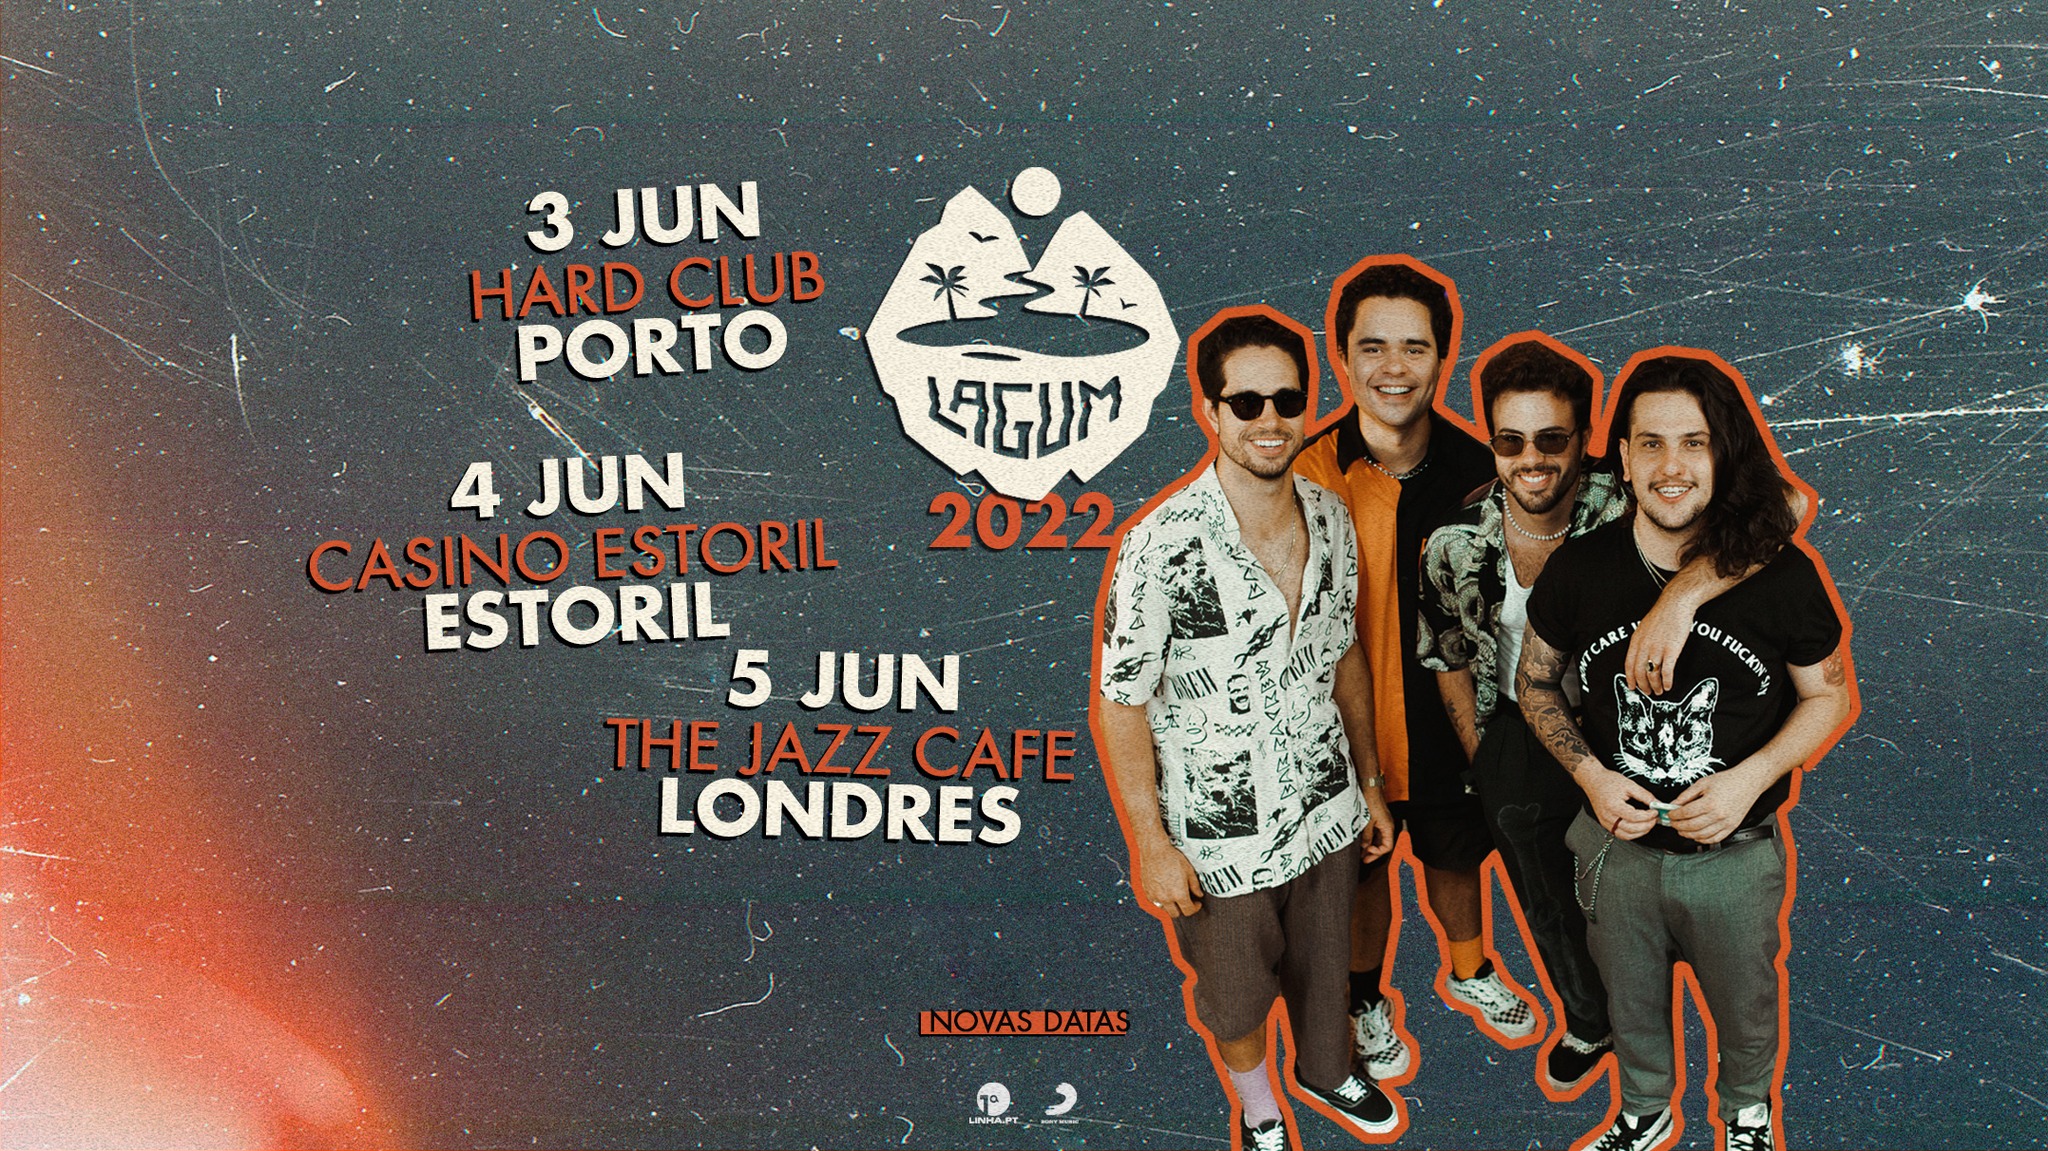 Nova data - Lagum: Estoril - 4 jun 2022